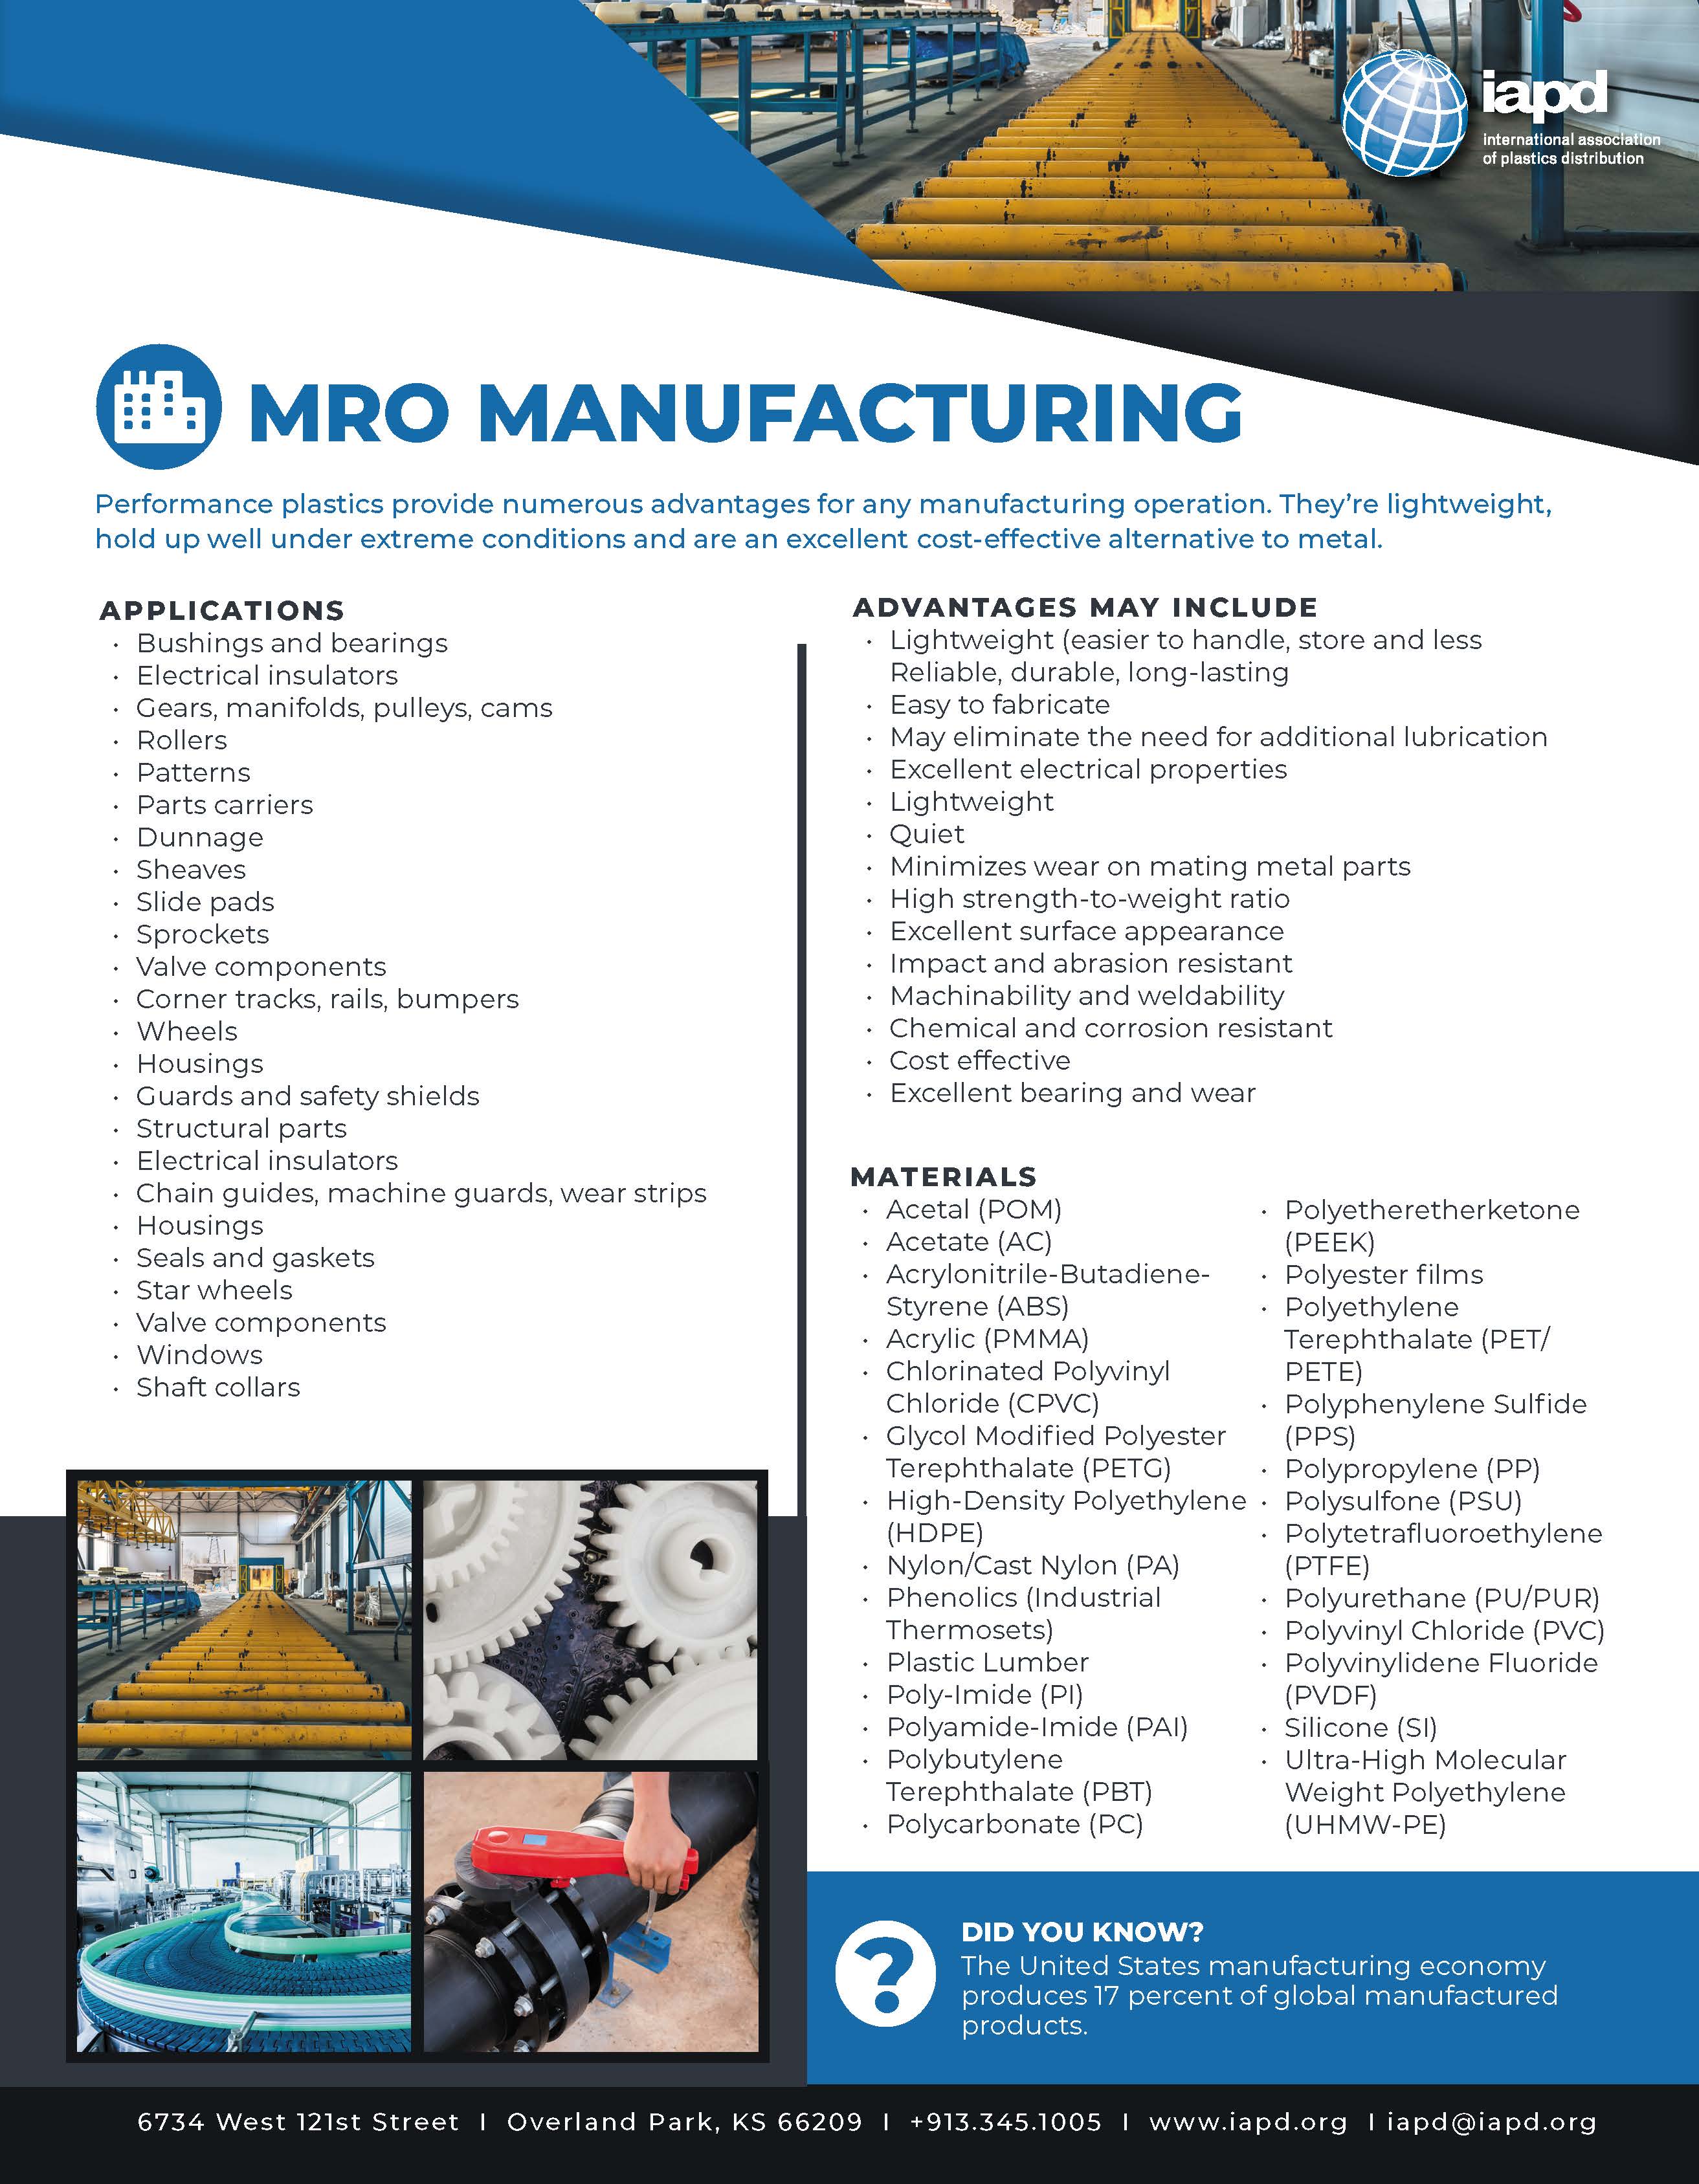 Top 26 Markets for Plastics: MRO Manufacturing